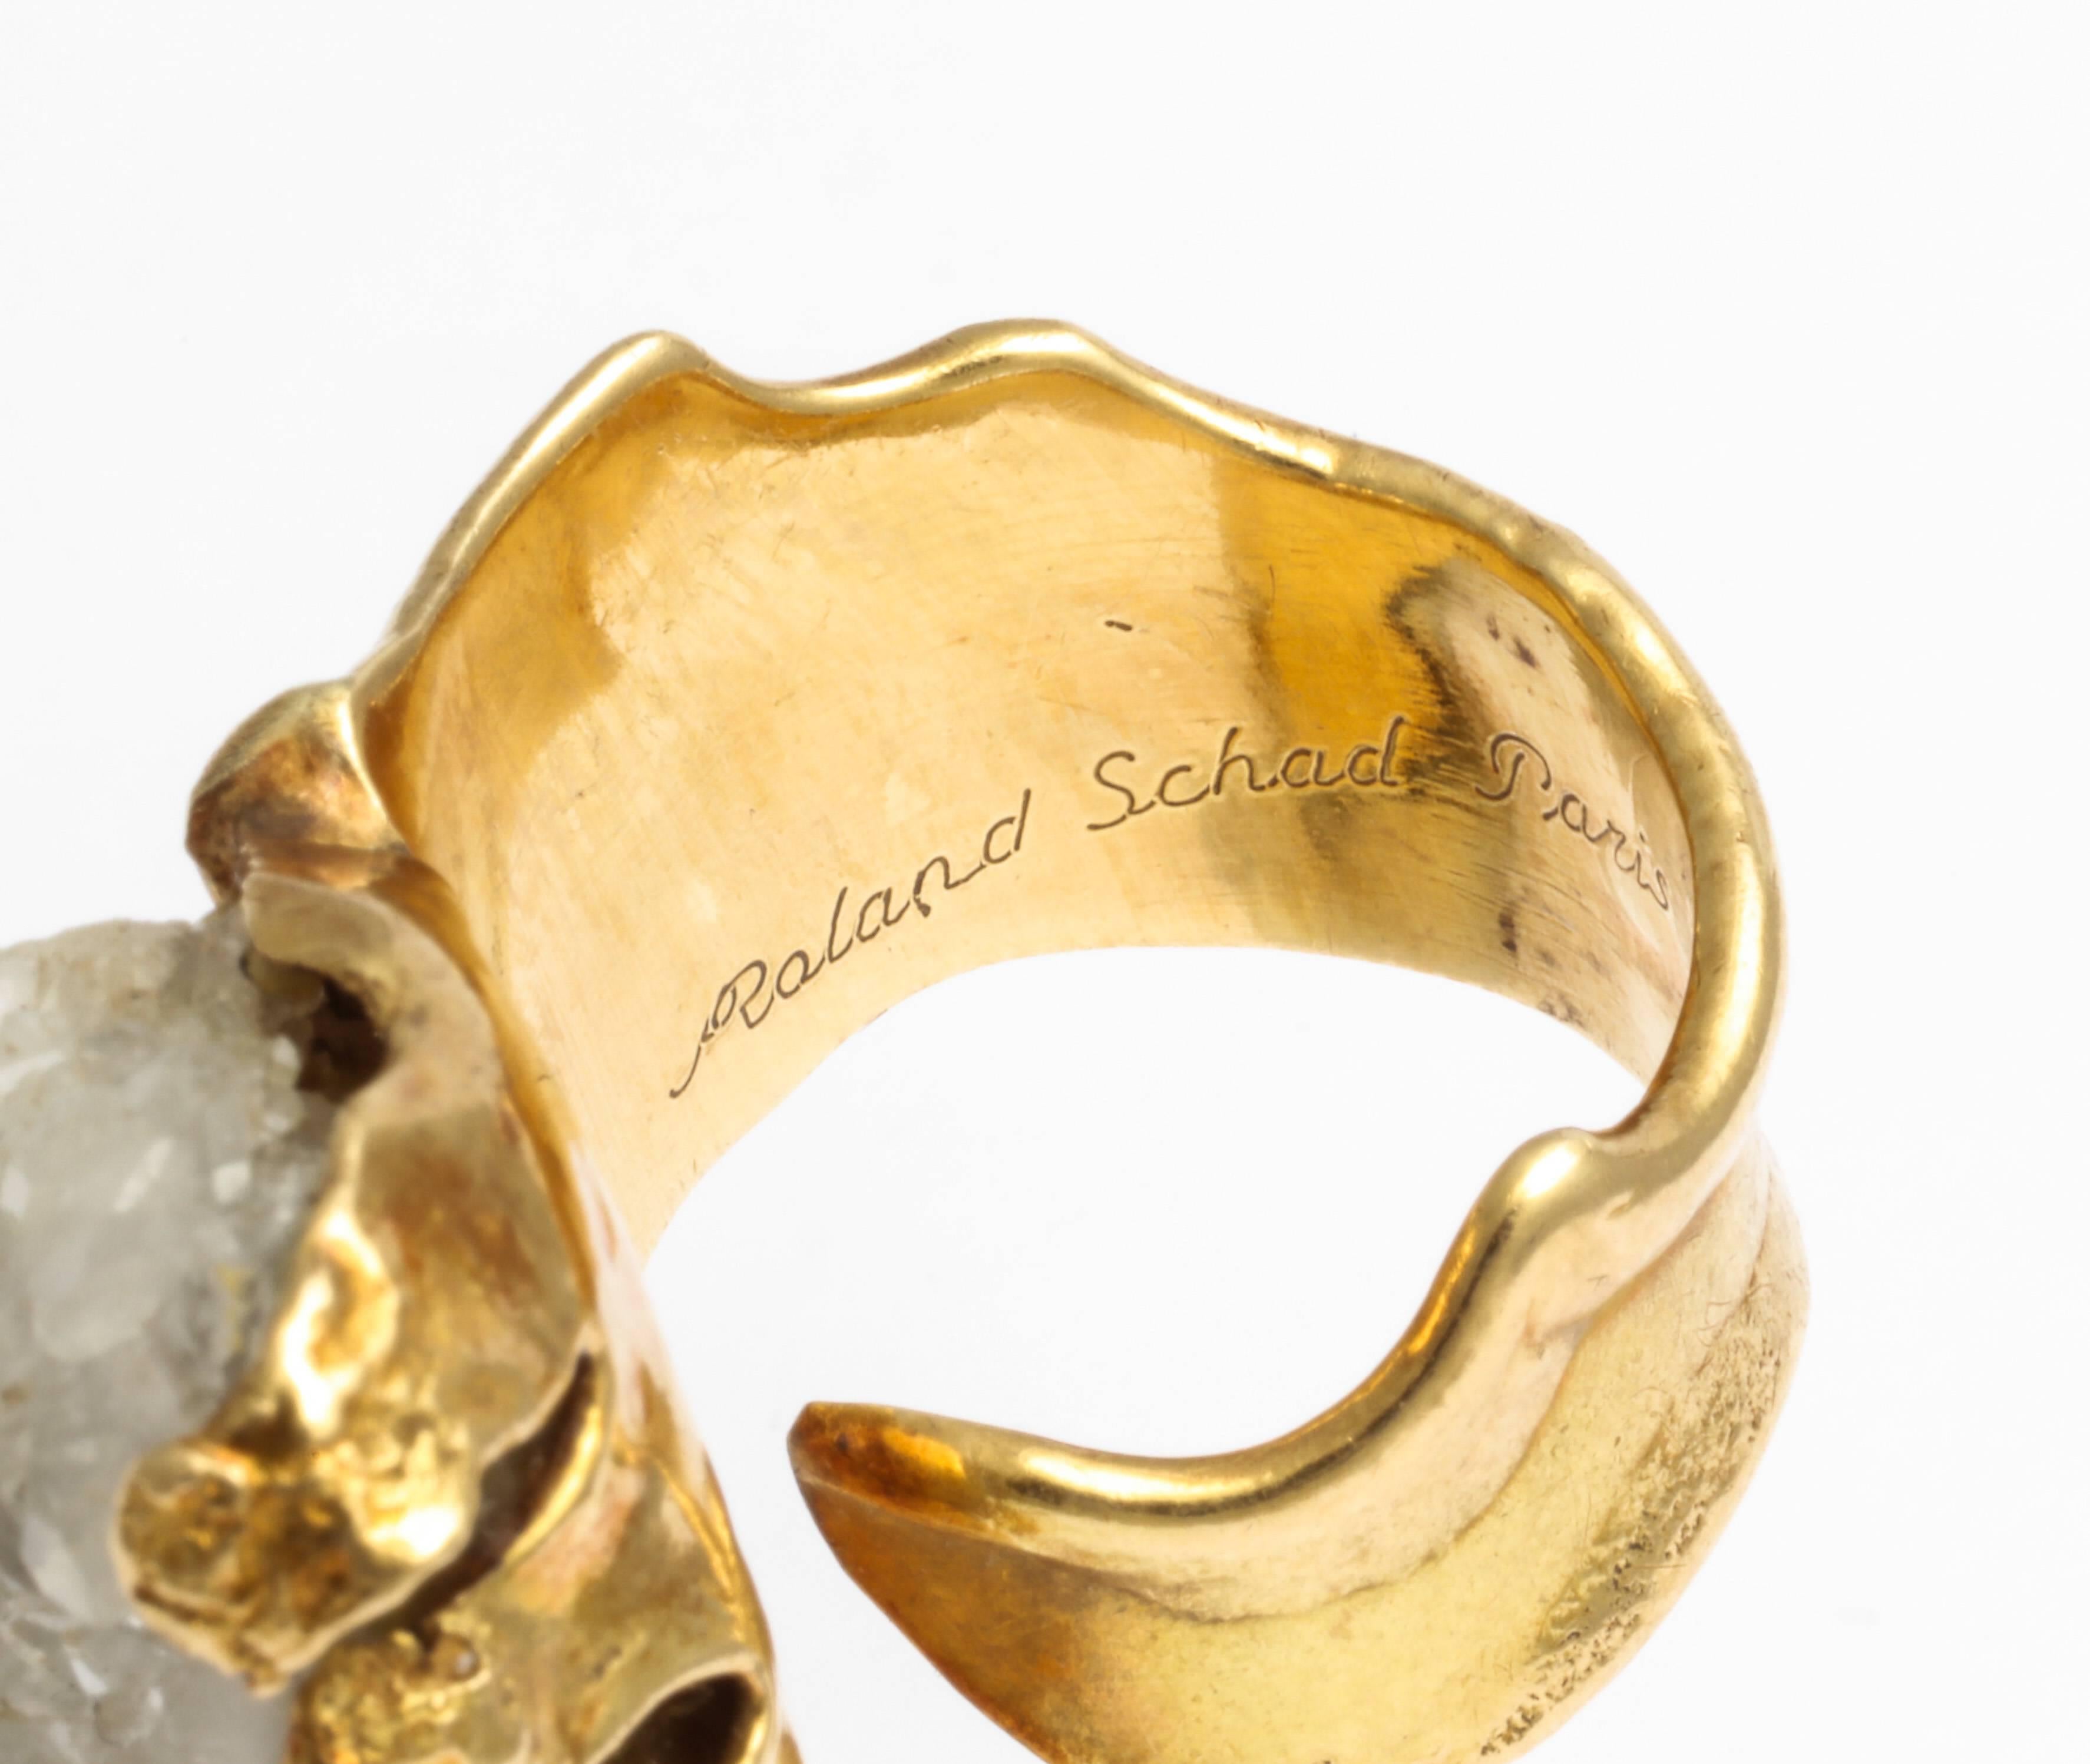 Roland Schad Brutalist Gold and Quartz Ring 1